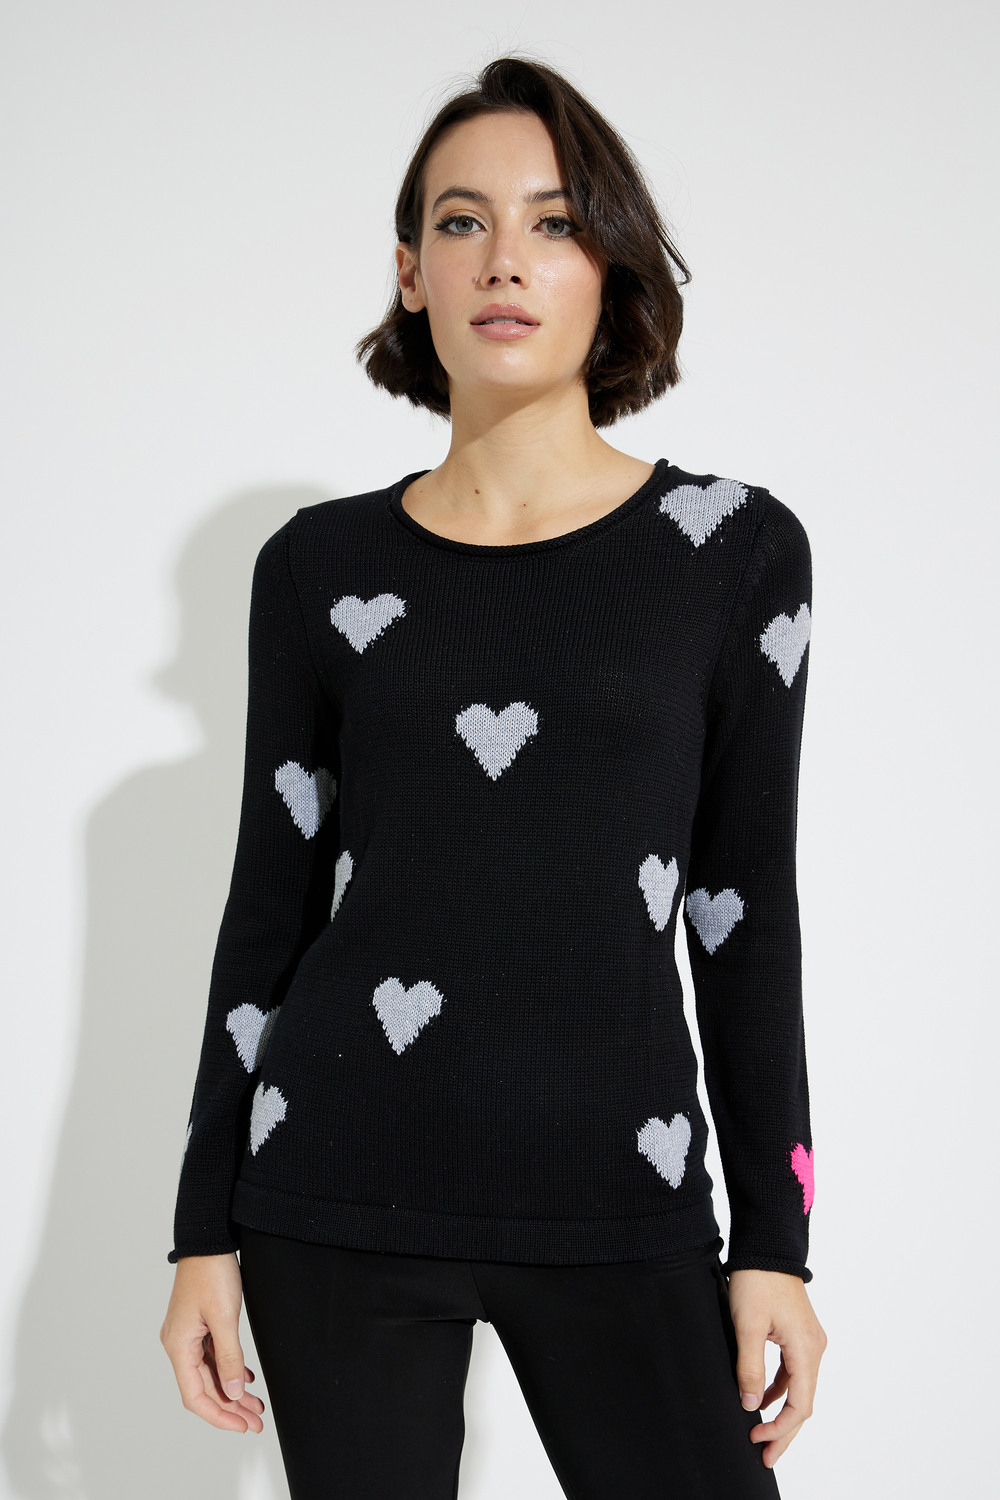 Heart Design Sweater Style EW29010. Black